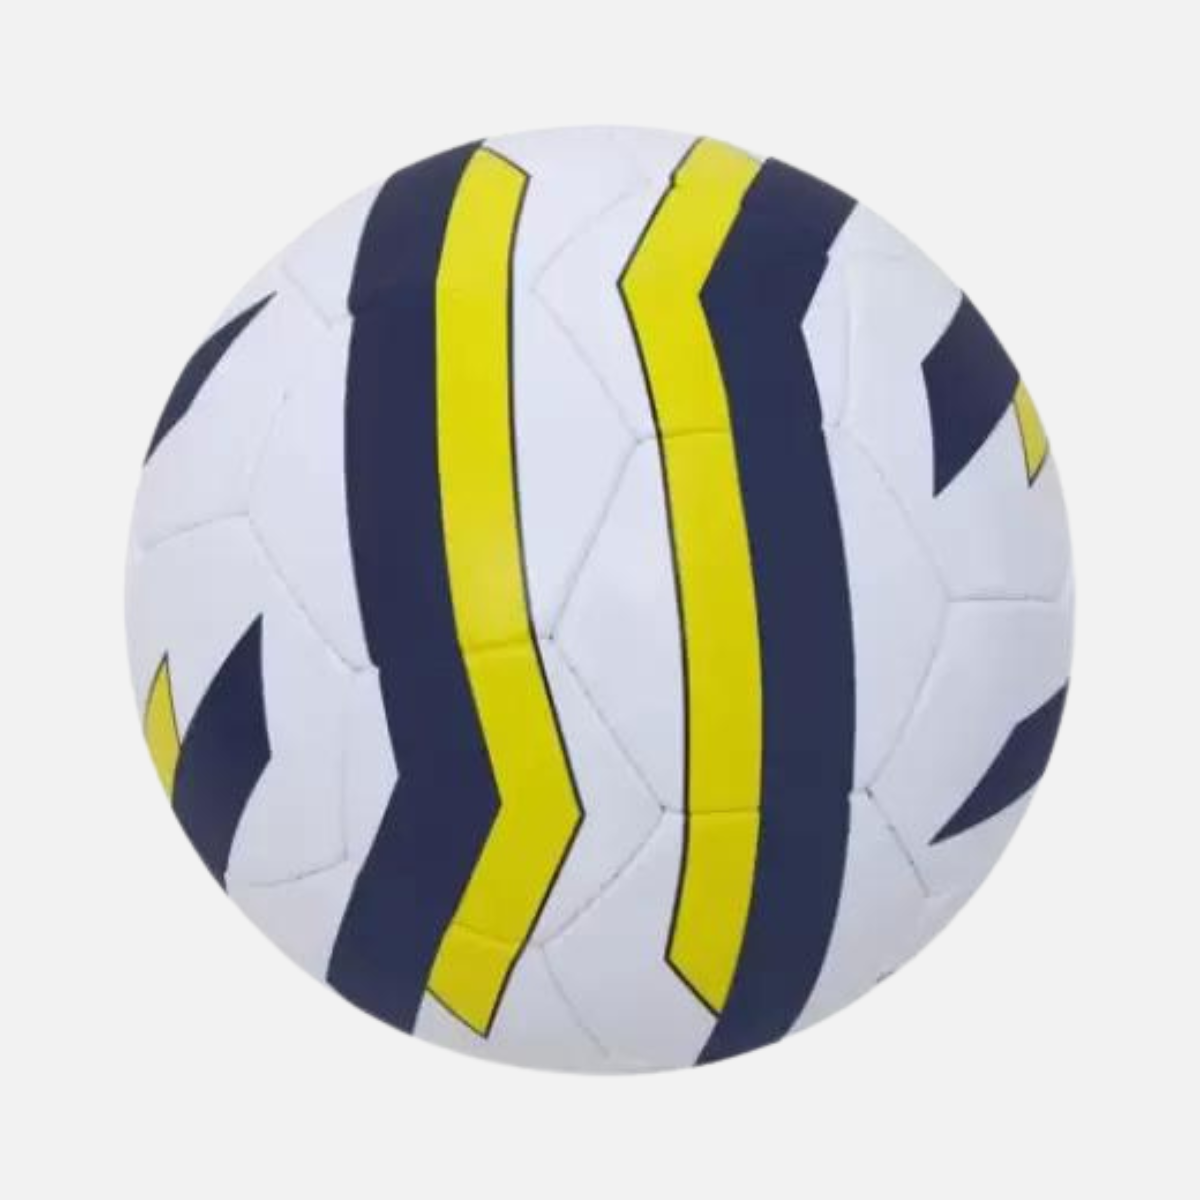 Nivia Vega Football -White/Yellow